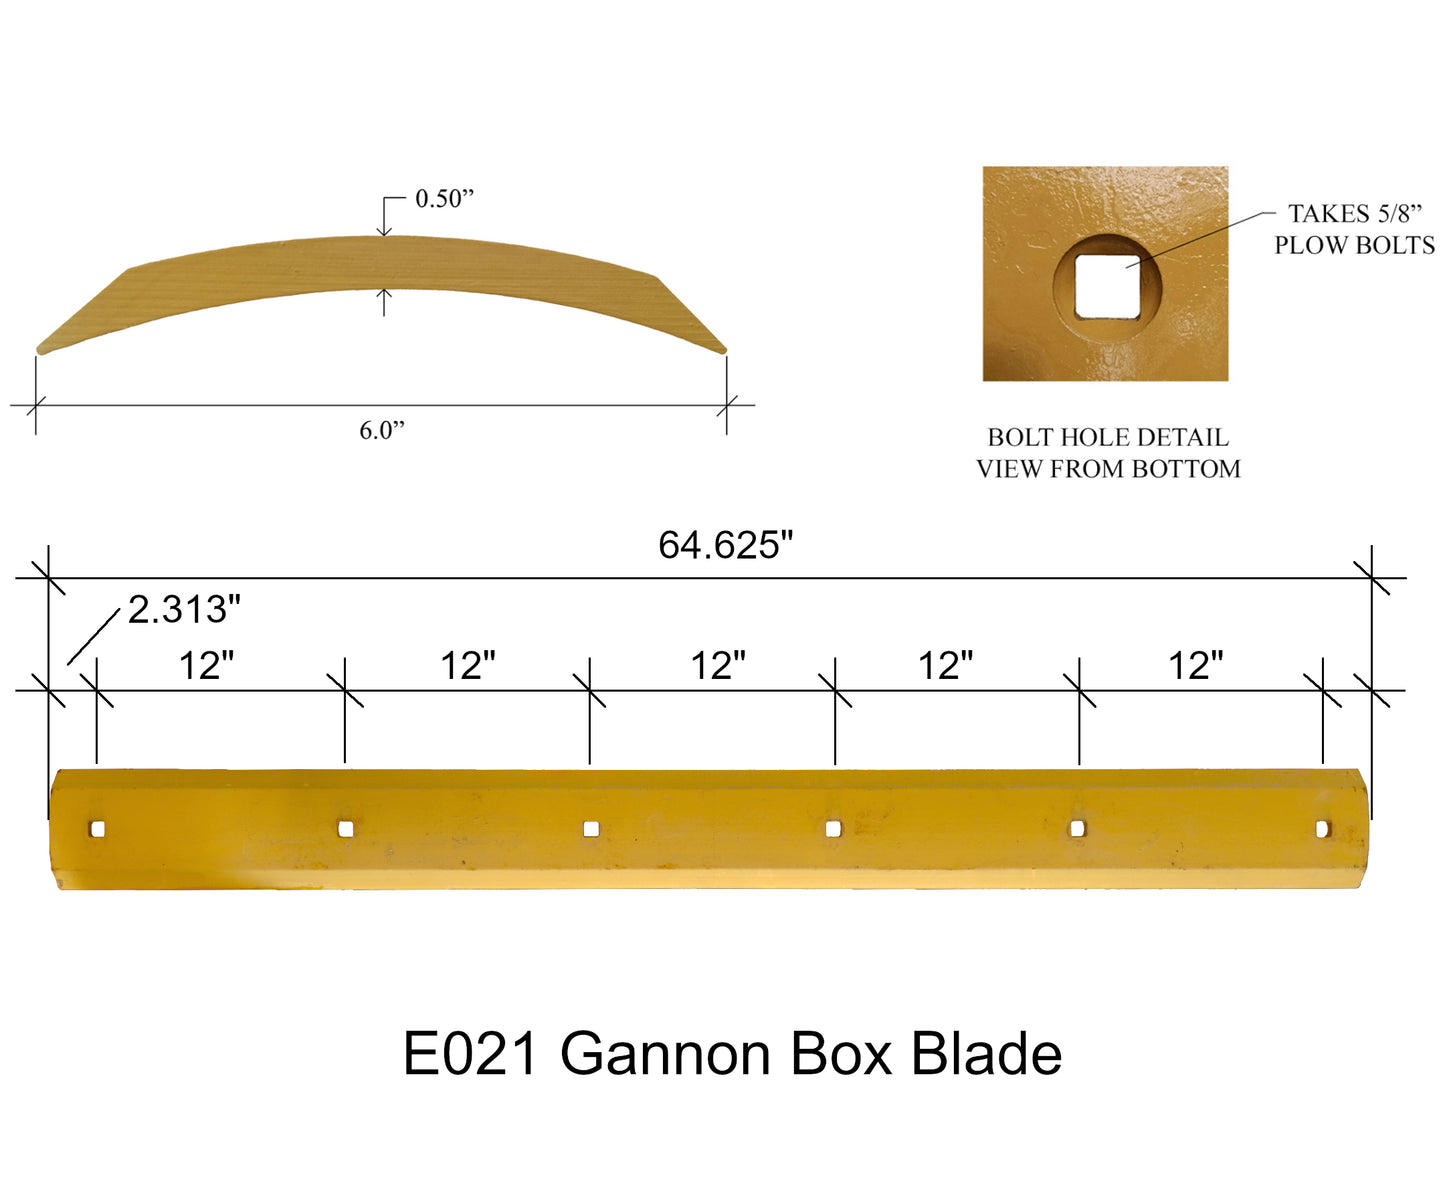 E021 - Cuchilla de caja raspadora con herrajes, se adapta a muchas cajas esparcidoras/rascadoras Gannon - 1/2" x 6" x 64.625"